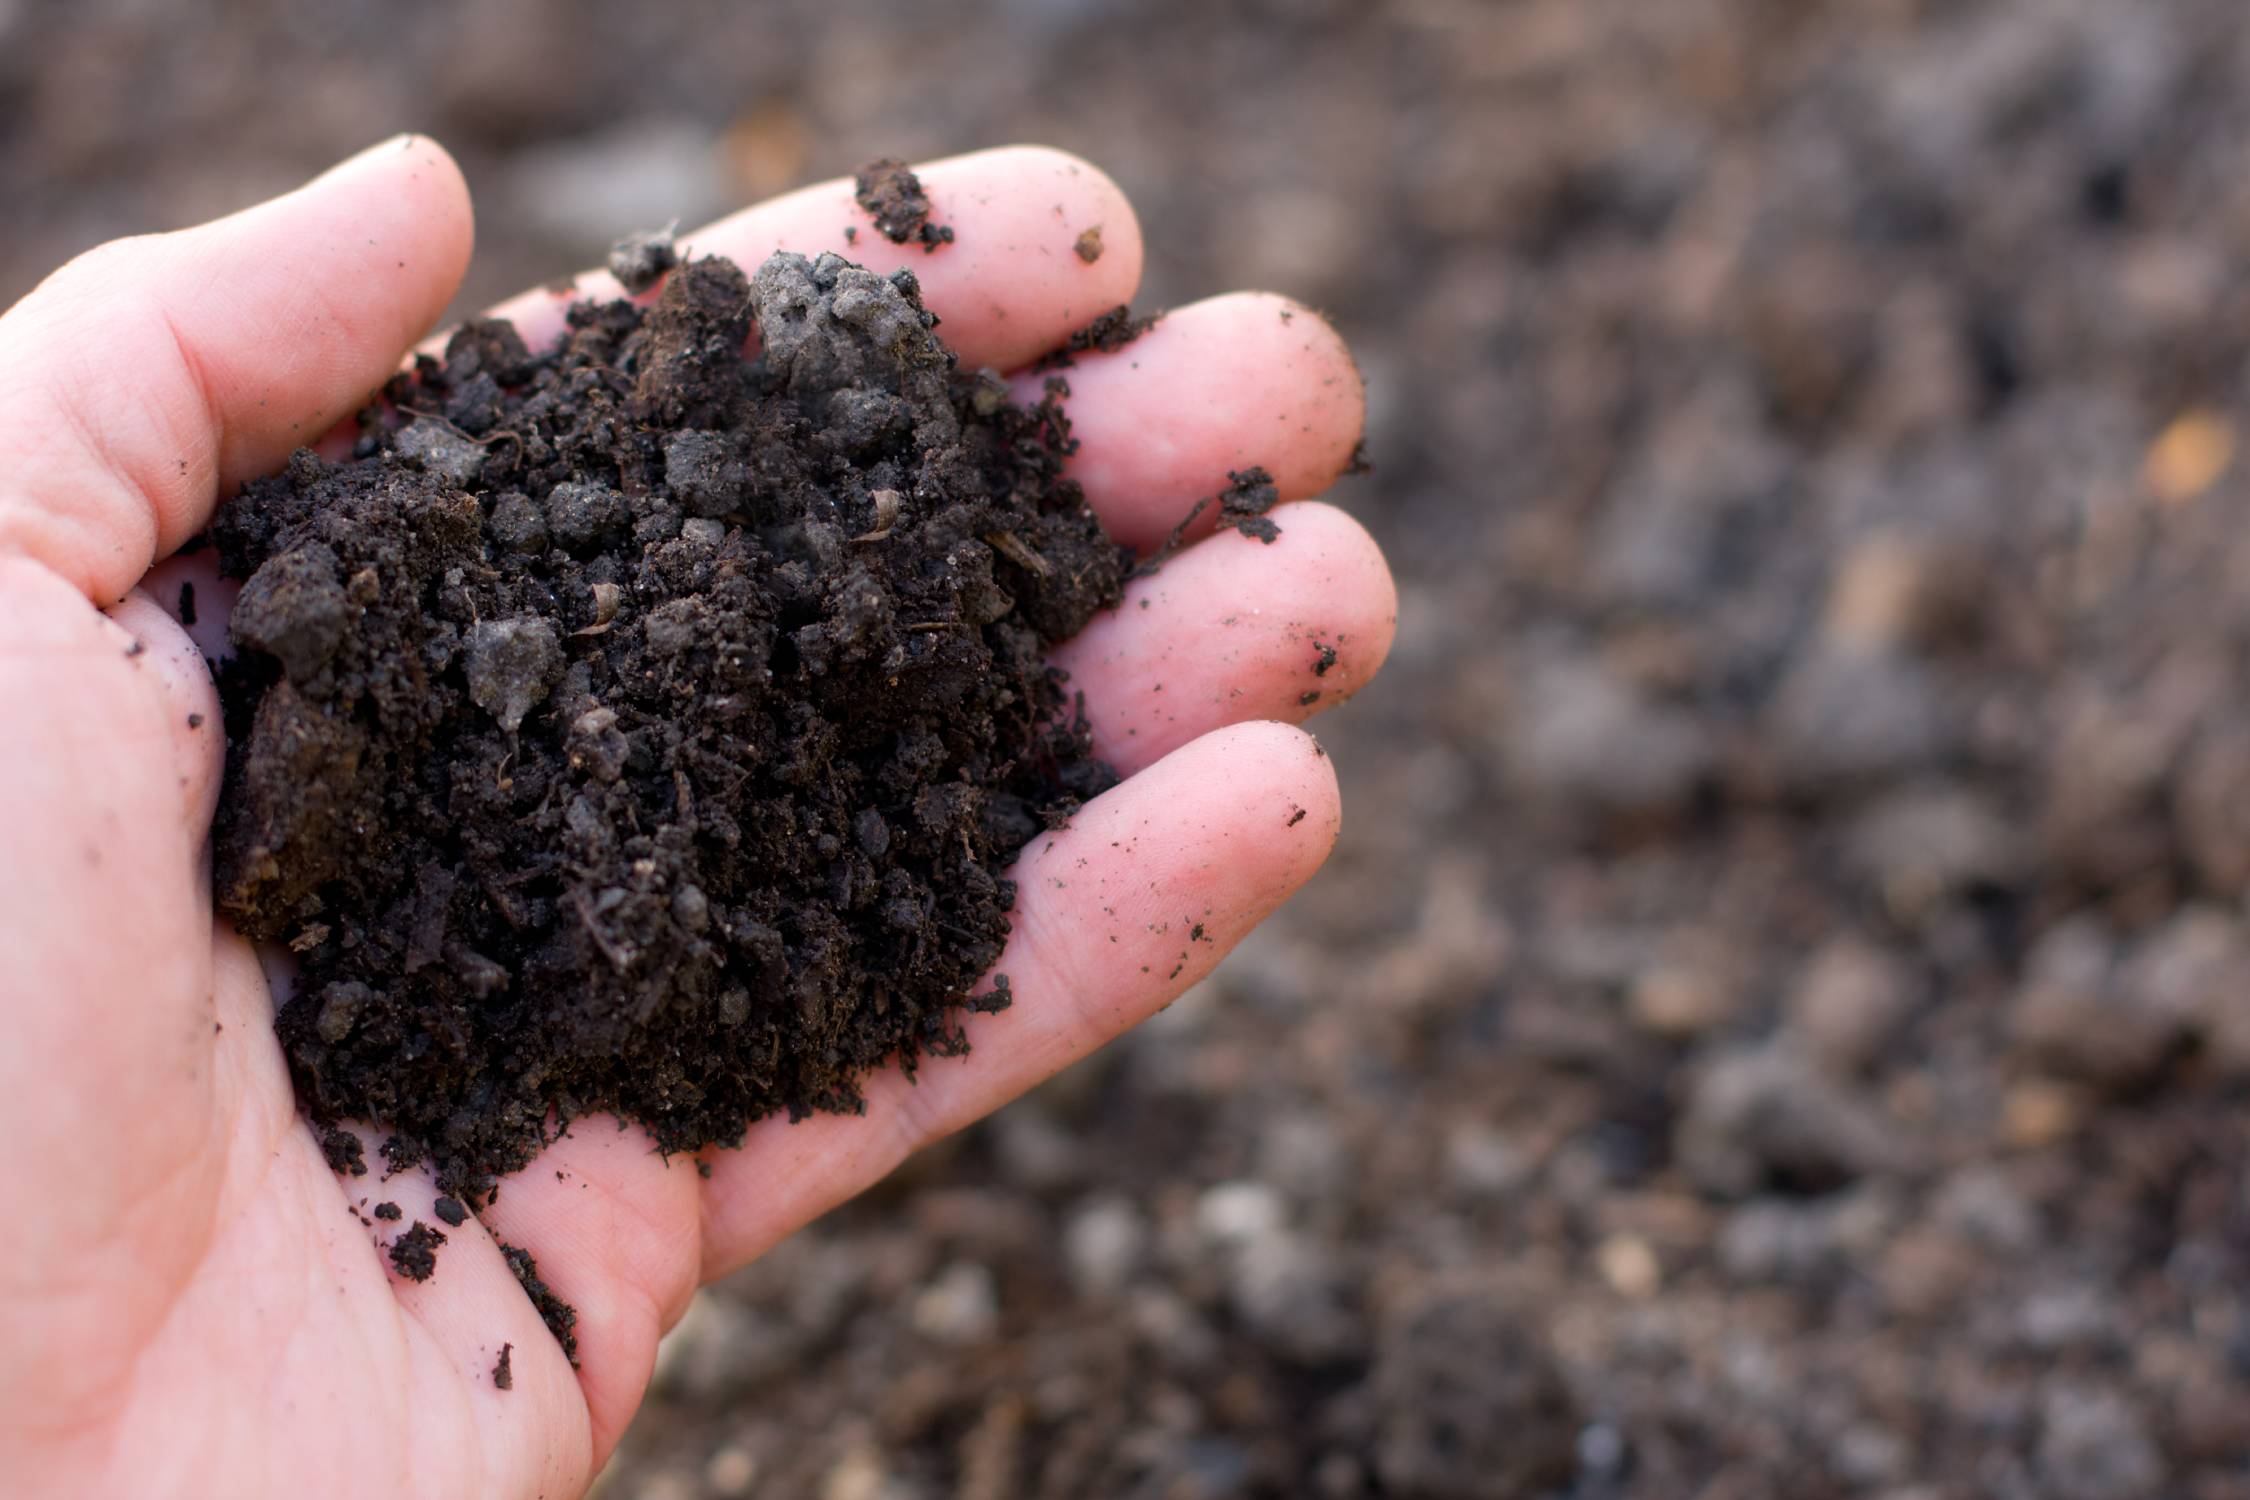 Handful of rich black soil. Photo ID 14606936 © Brad Calkins | Dreamstime.com